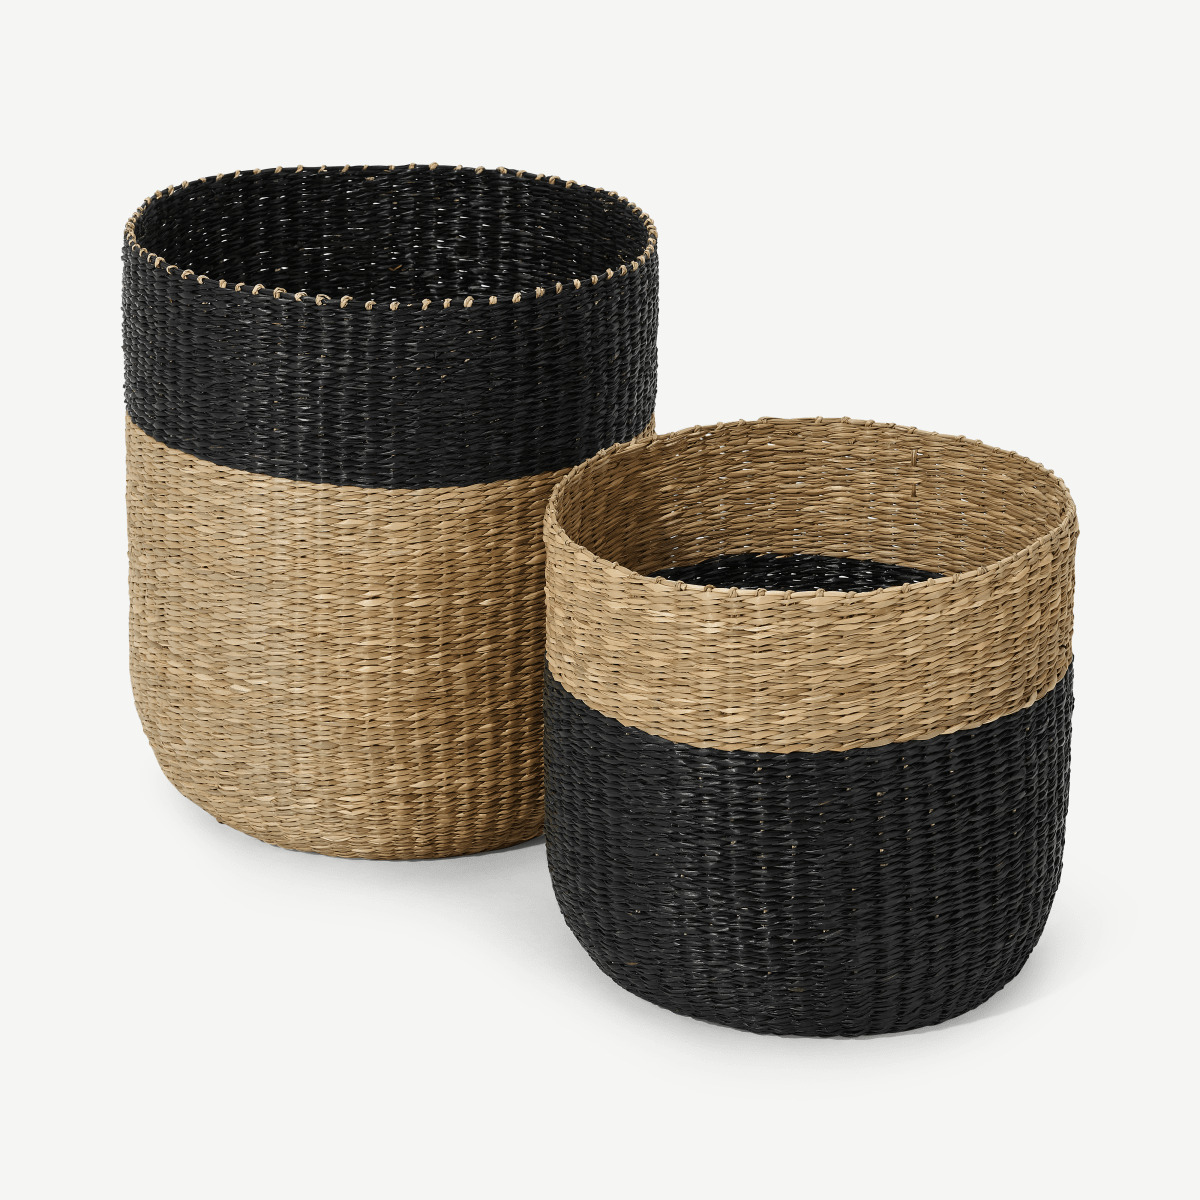 Otten Set of 2 Baskets, Black & Natural Seagrass